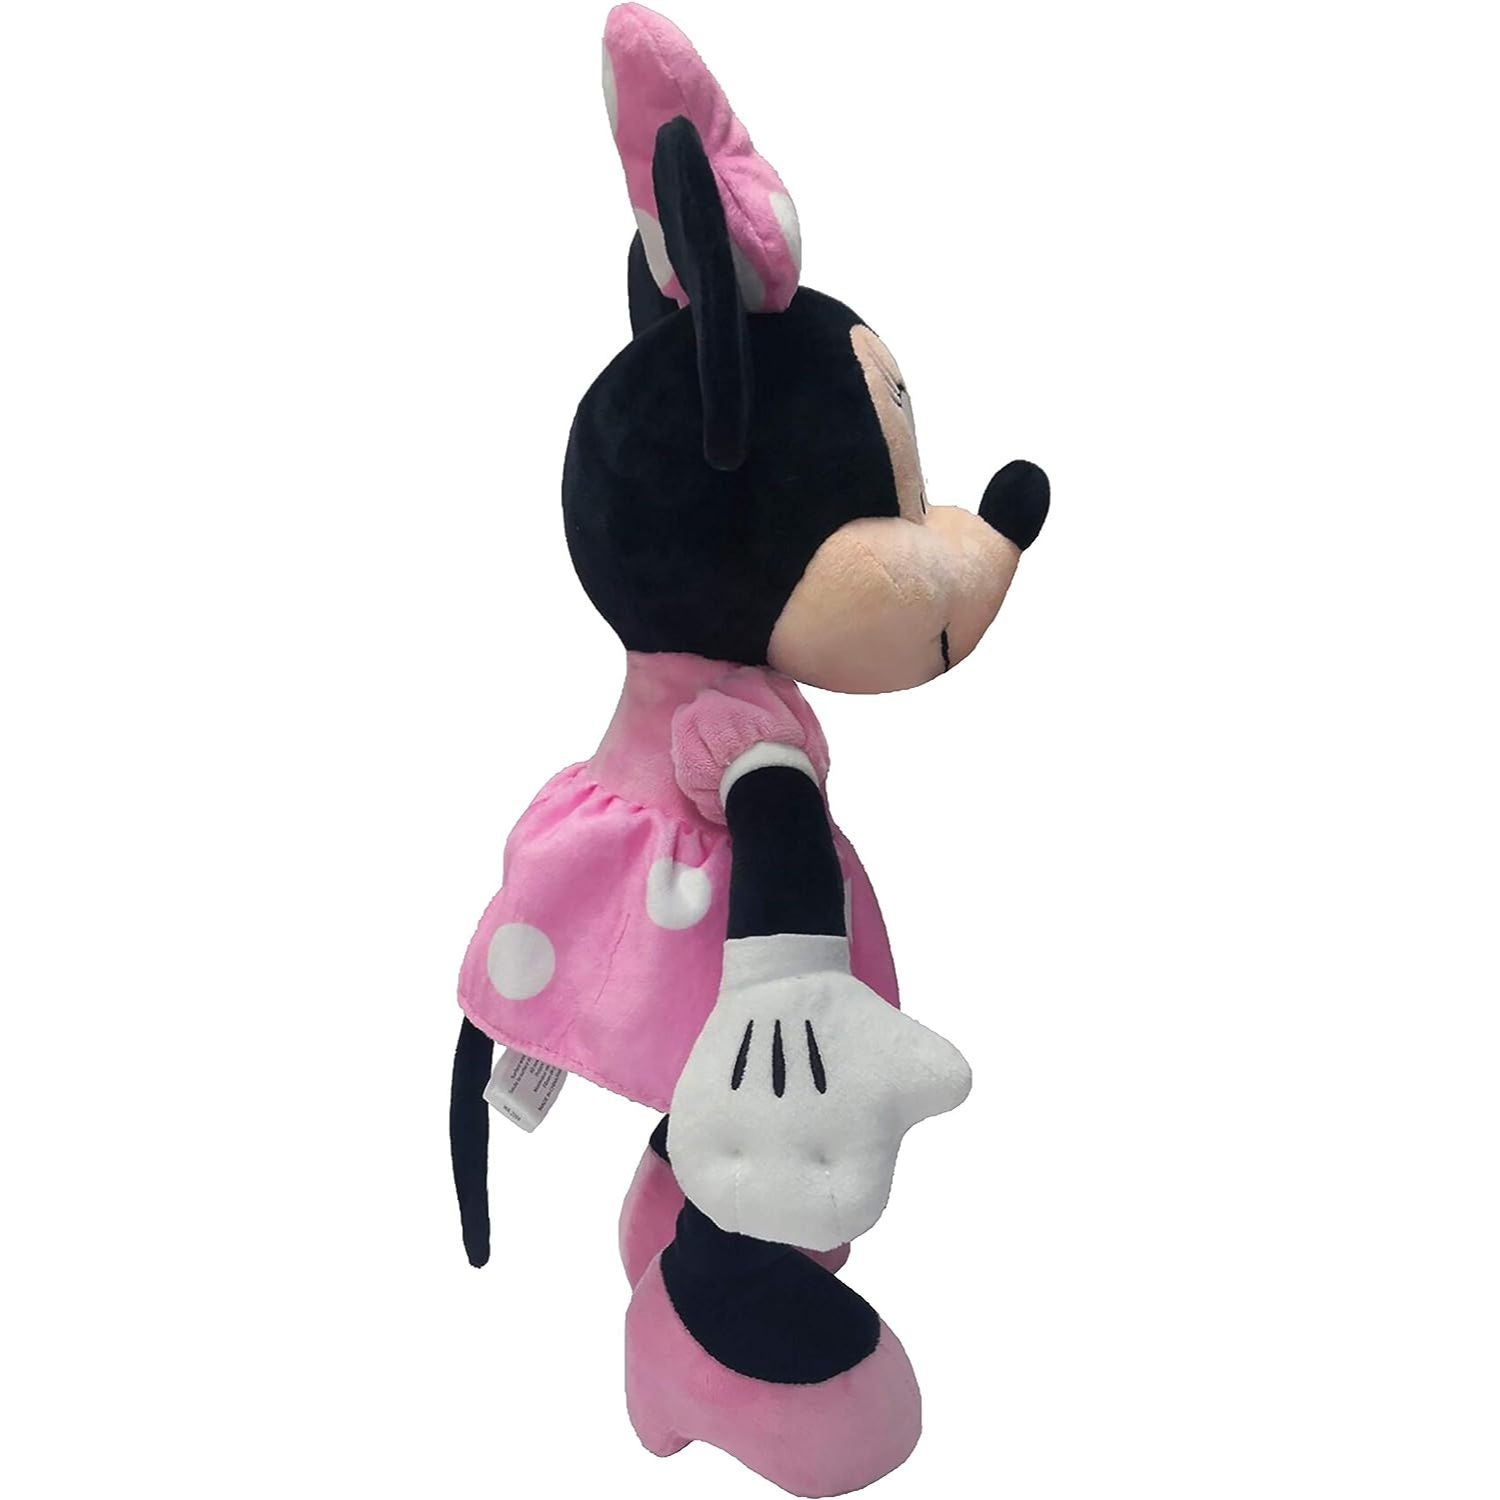 Disney Plush Toys Minnie mouse side pose - Heretoserveyou